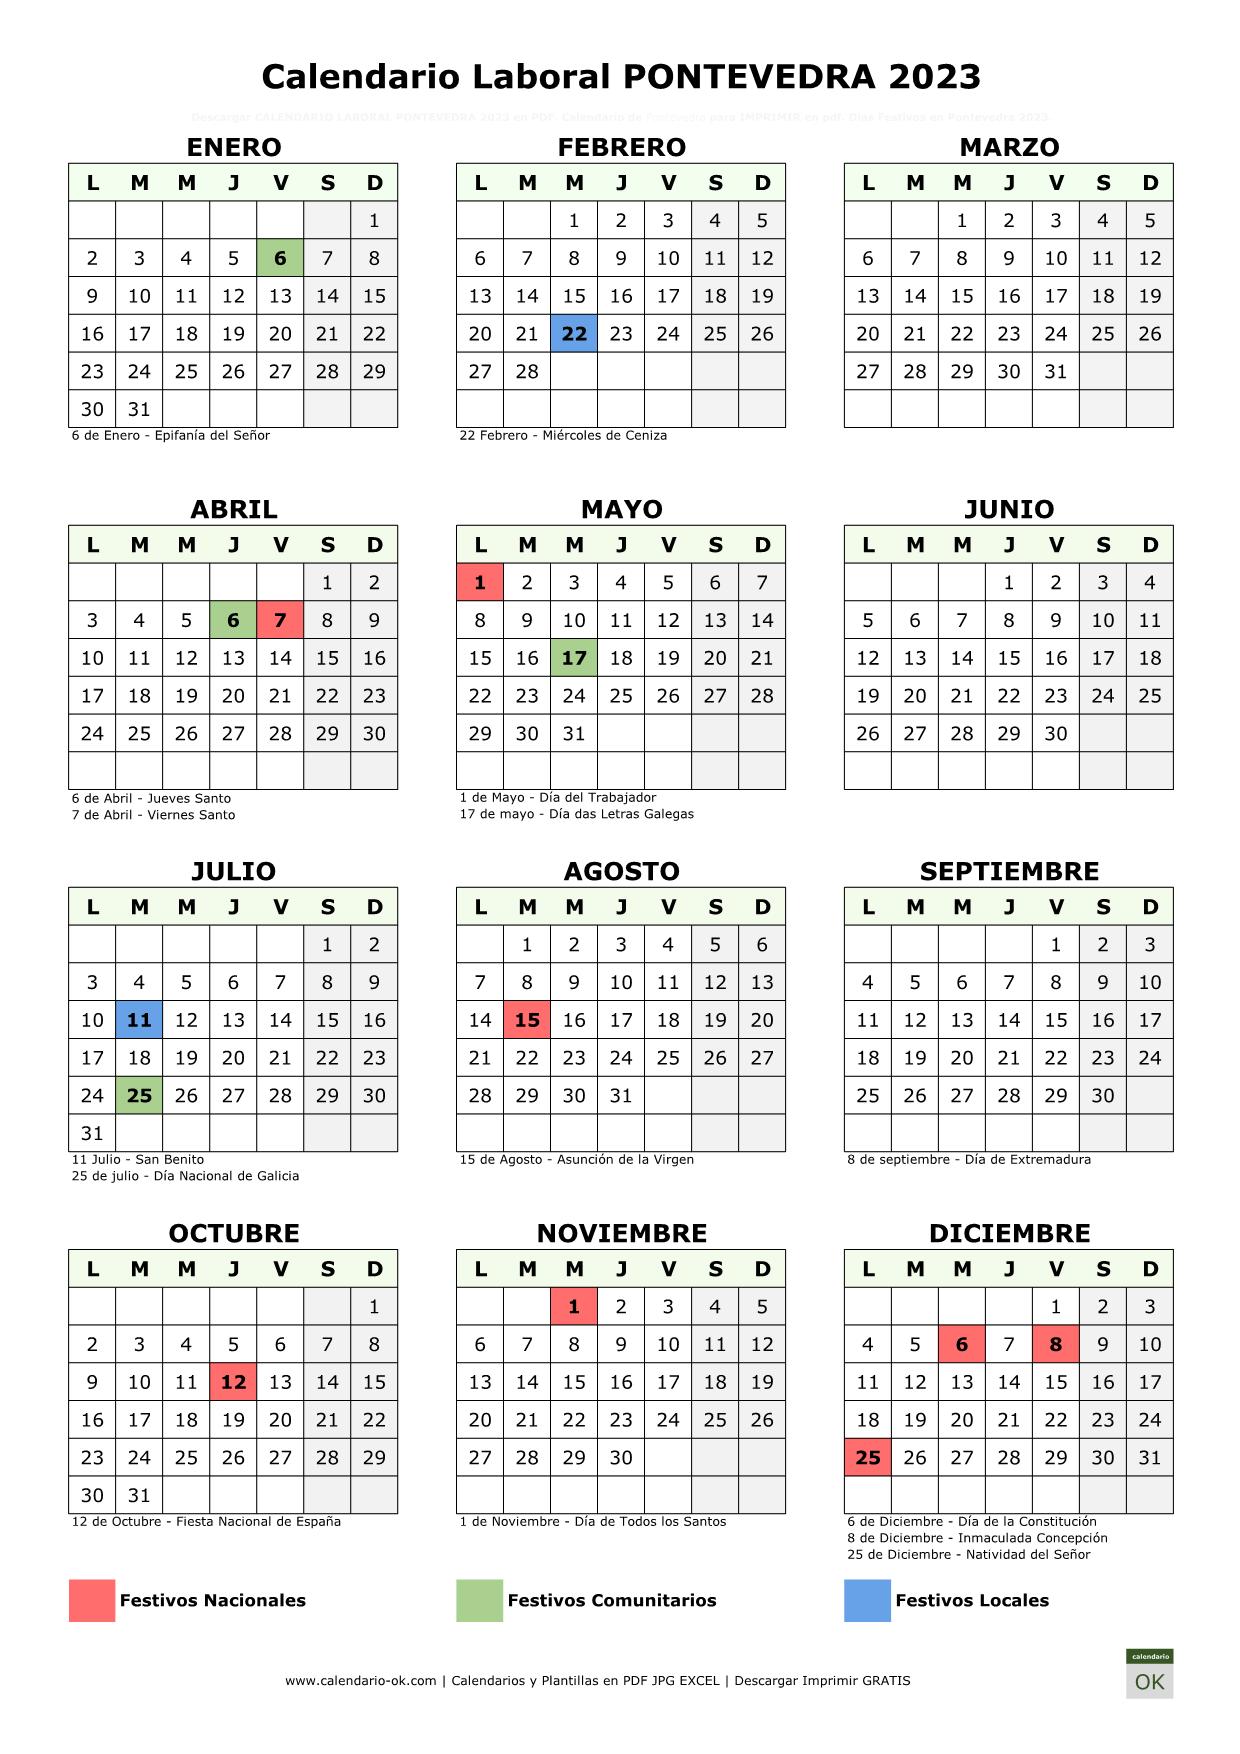 Calendario Laboral Pontevedra 2023 vertical